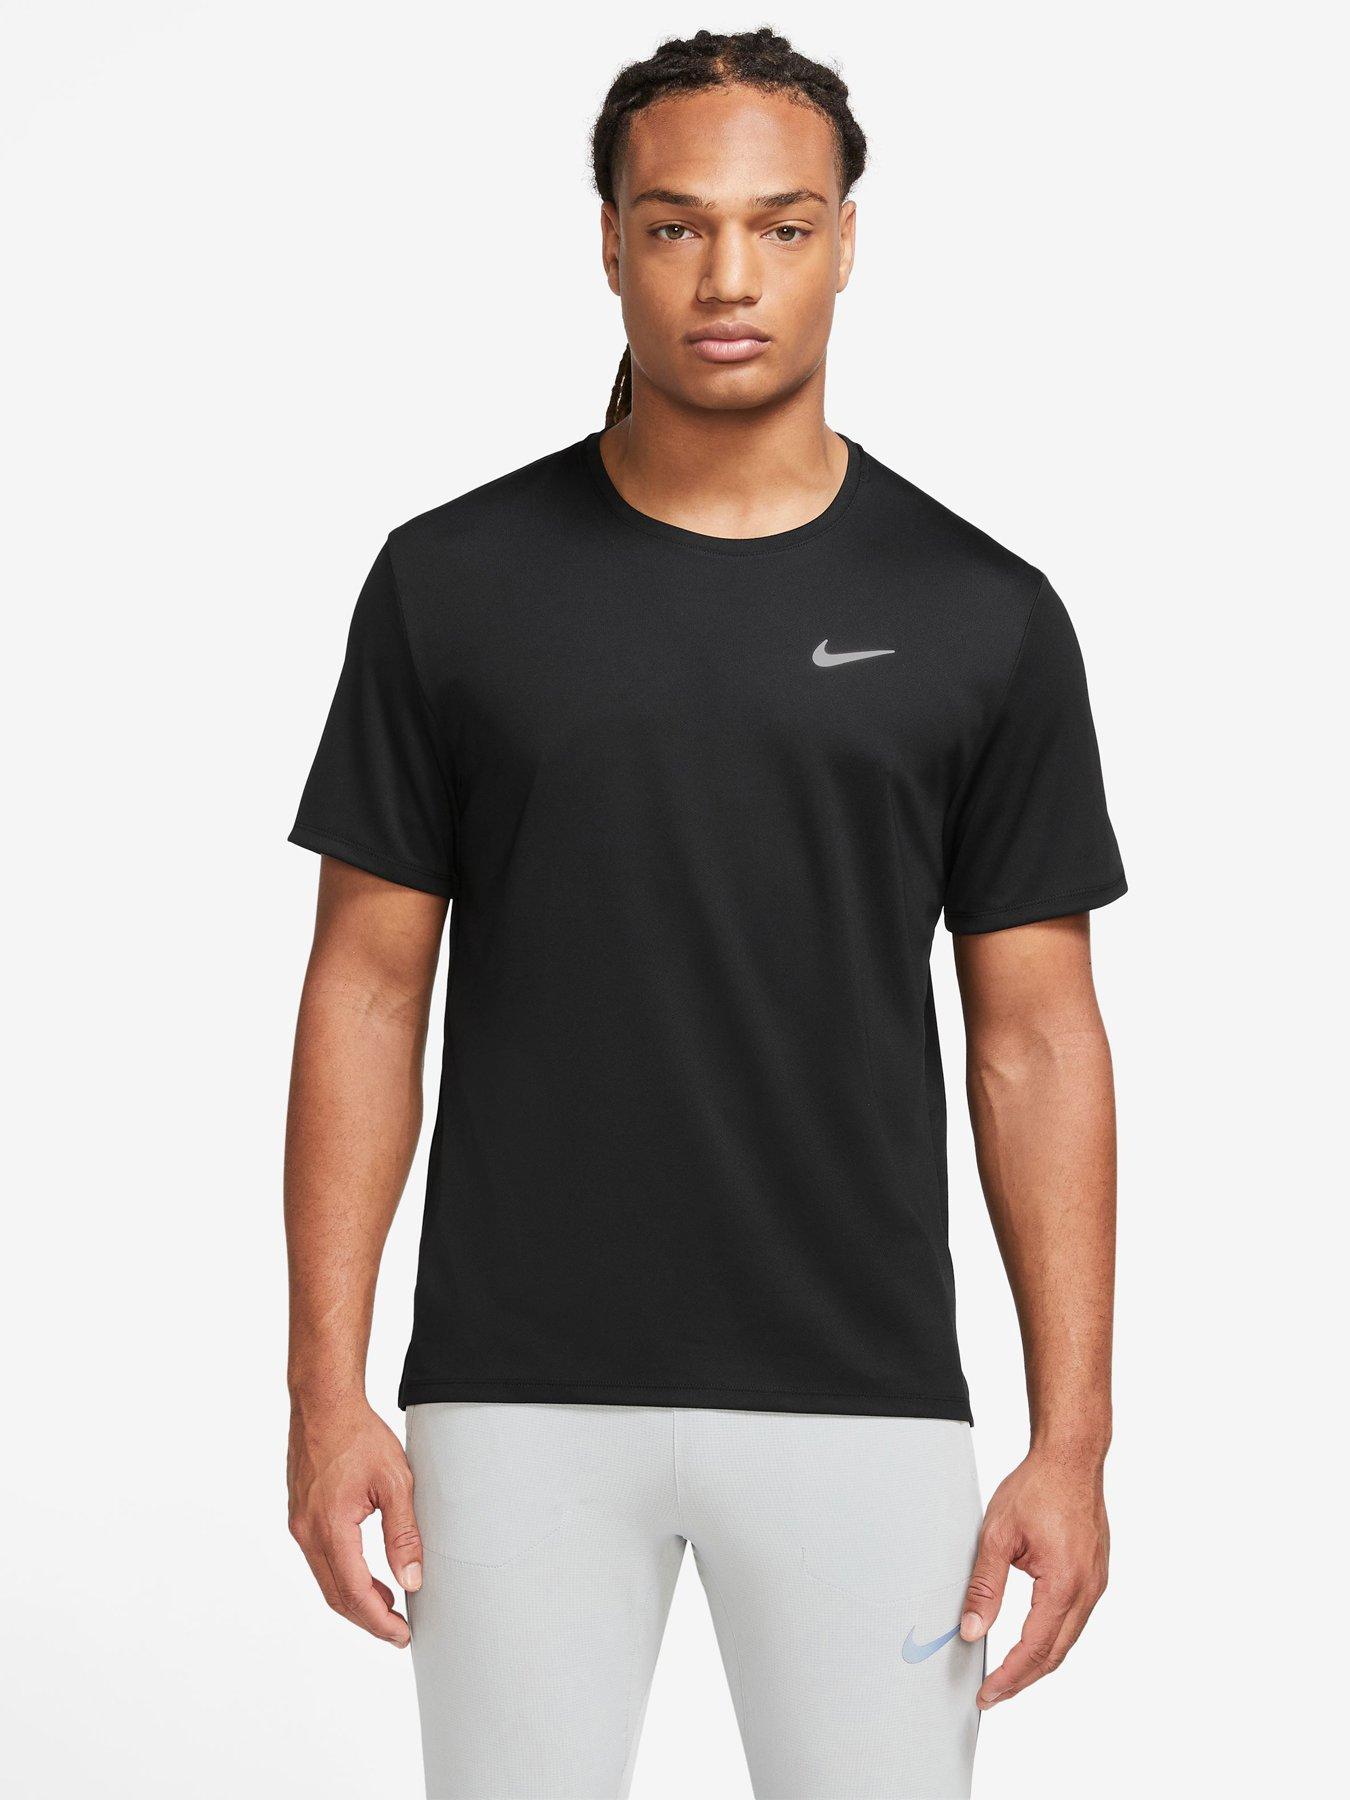 Nike Pro Combat Padded Shirt jersey spor  Sport dress, Smart outfit, Padded  compression shirt